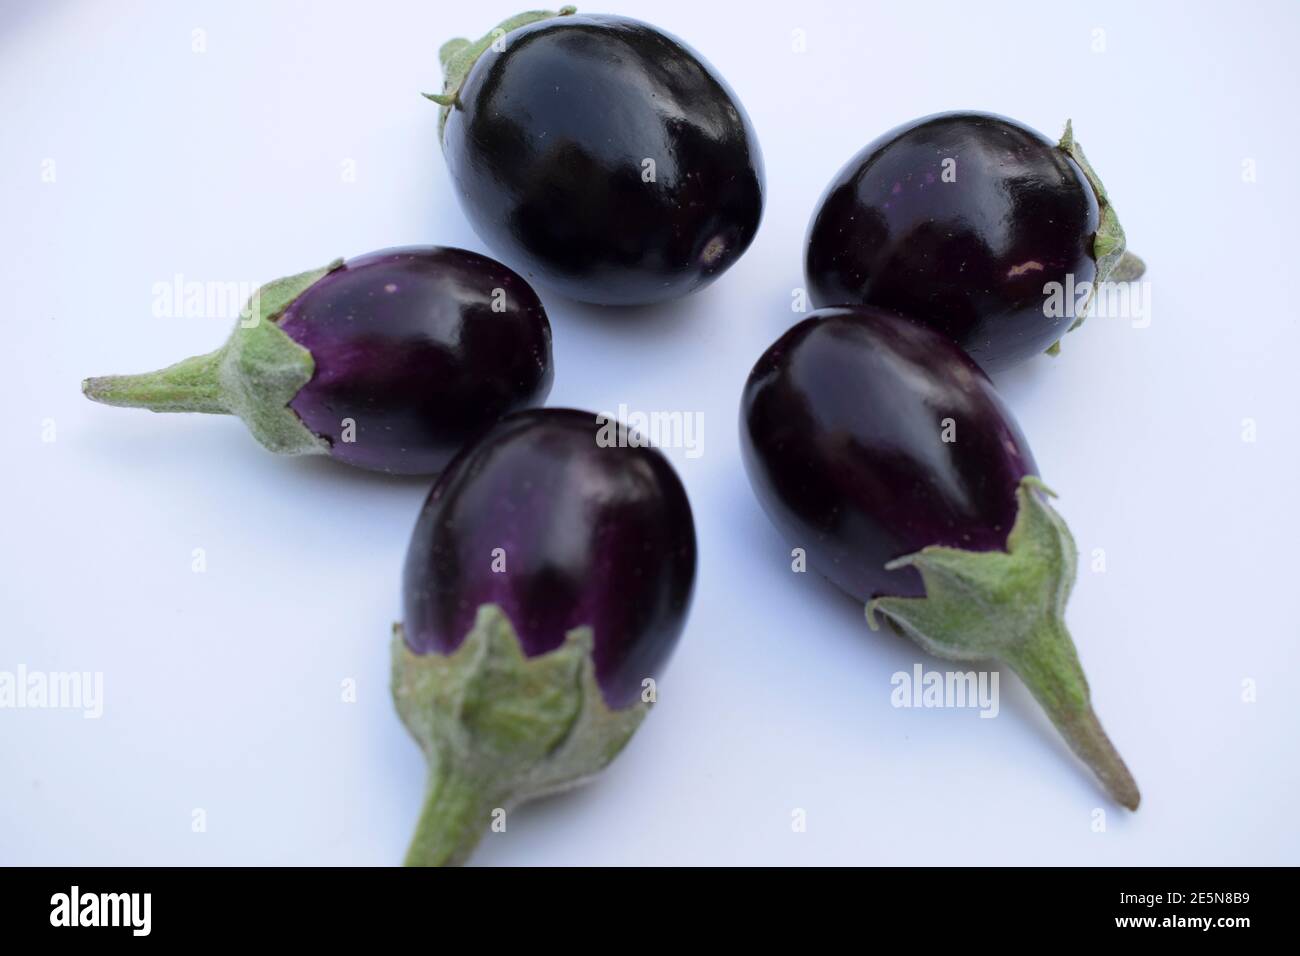 Brinjal (baingan) also known as eggplant or aubergine botanical name of  brinjal is Solanum melongeana Stock Photo - Alamy